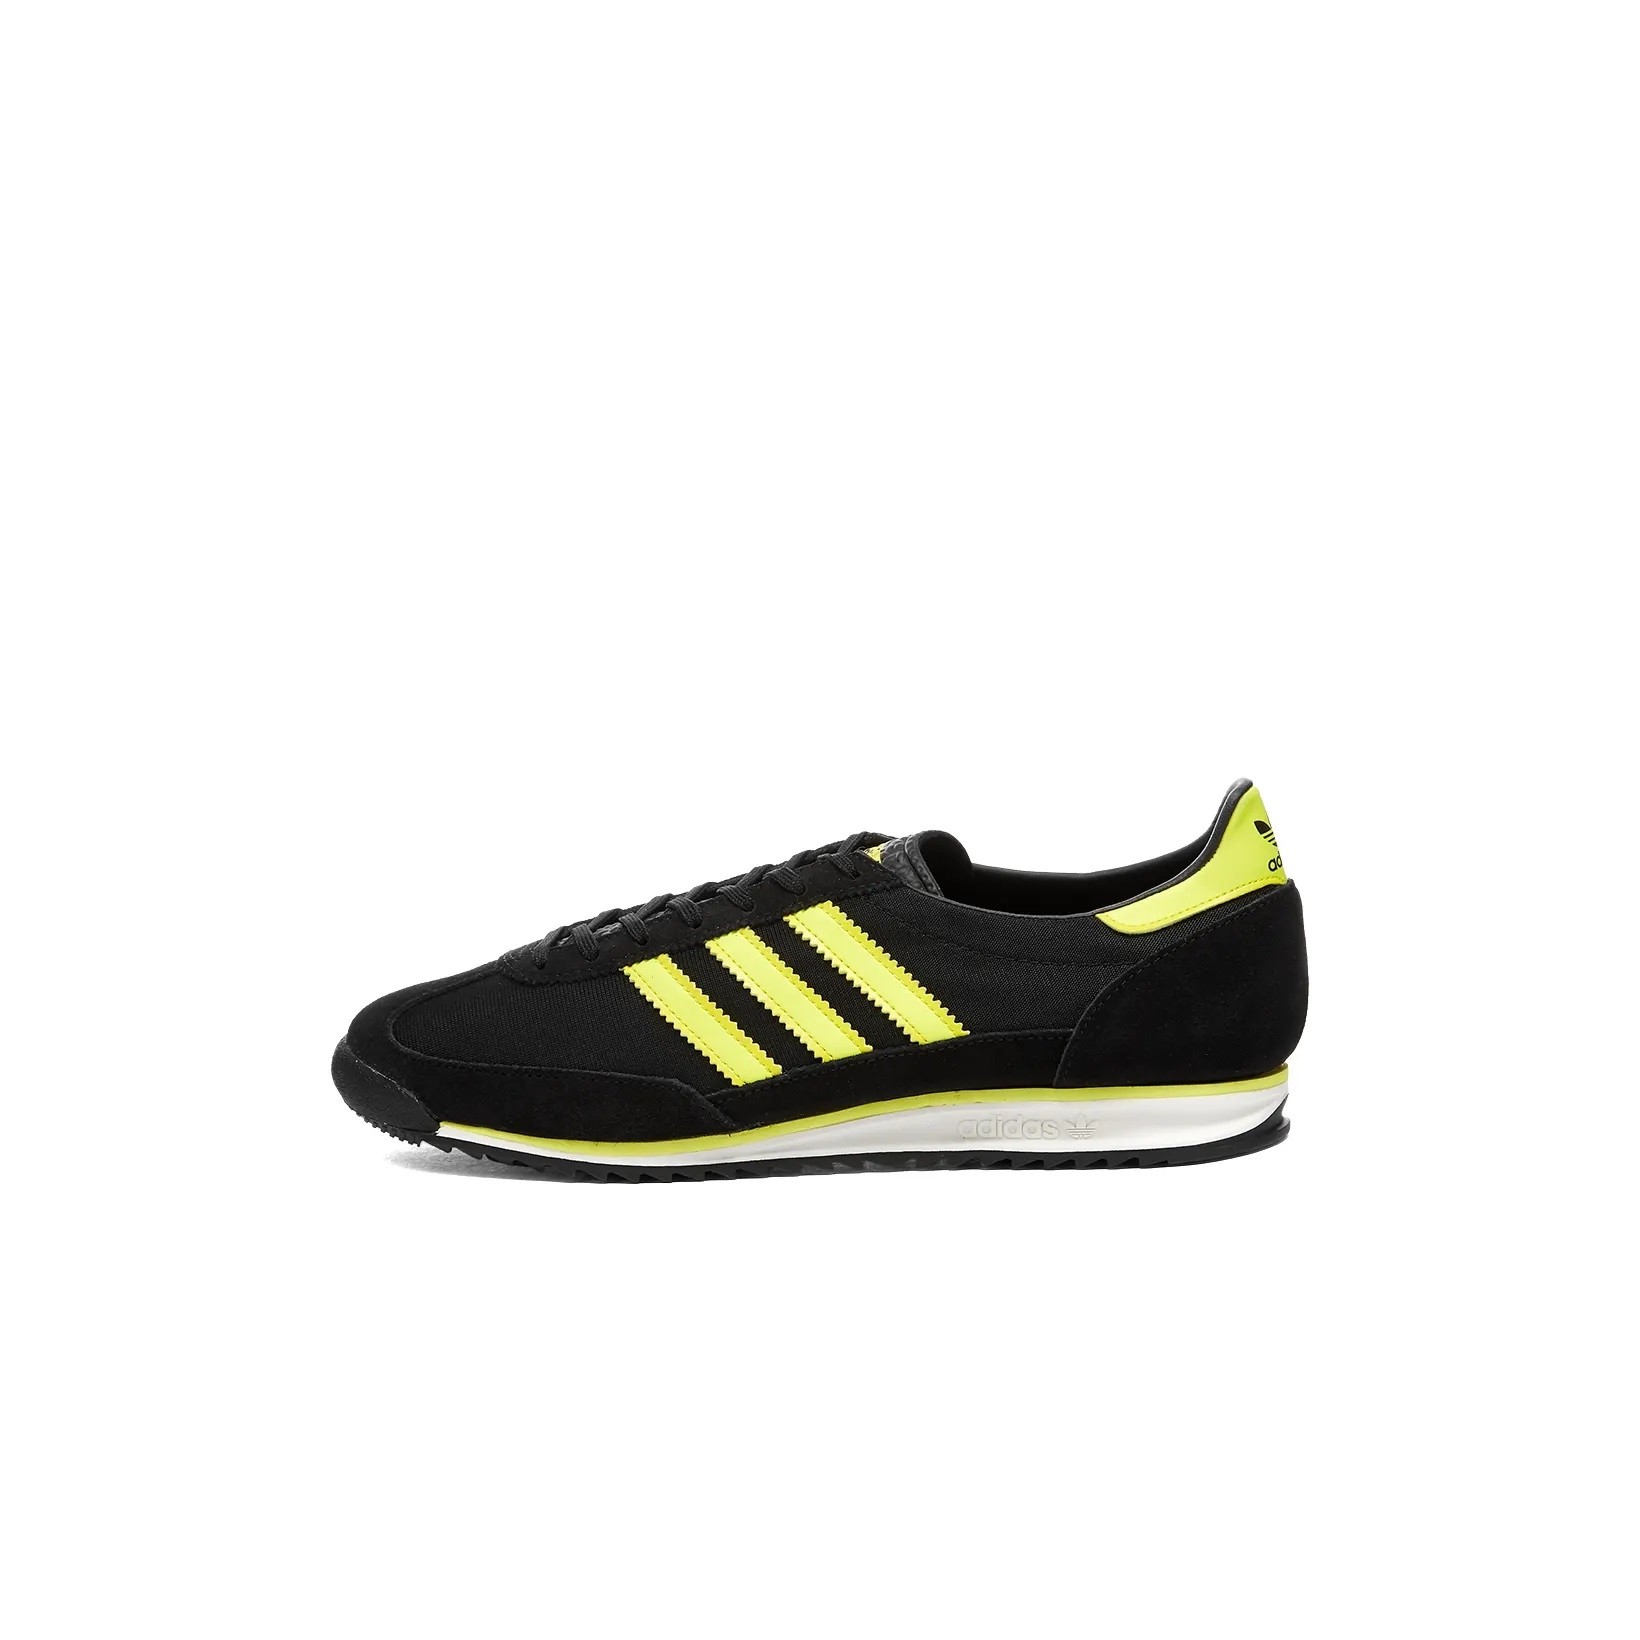 Adidas SL 72 Black,Acid Yellow & White